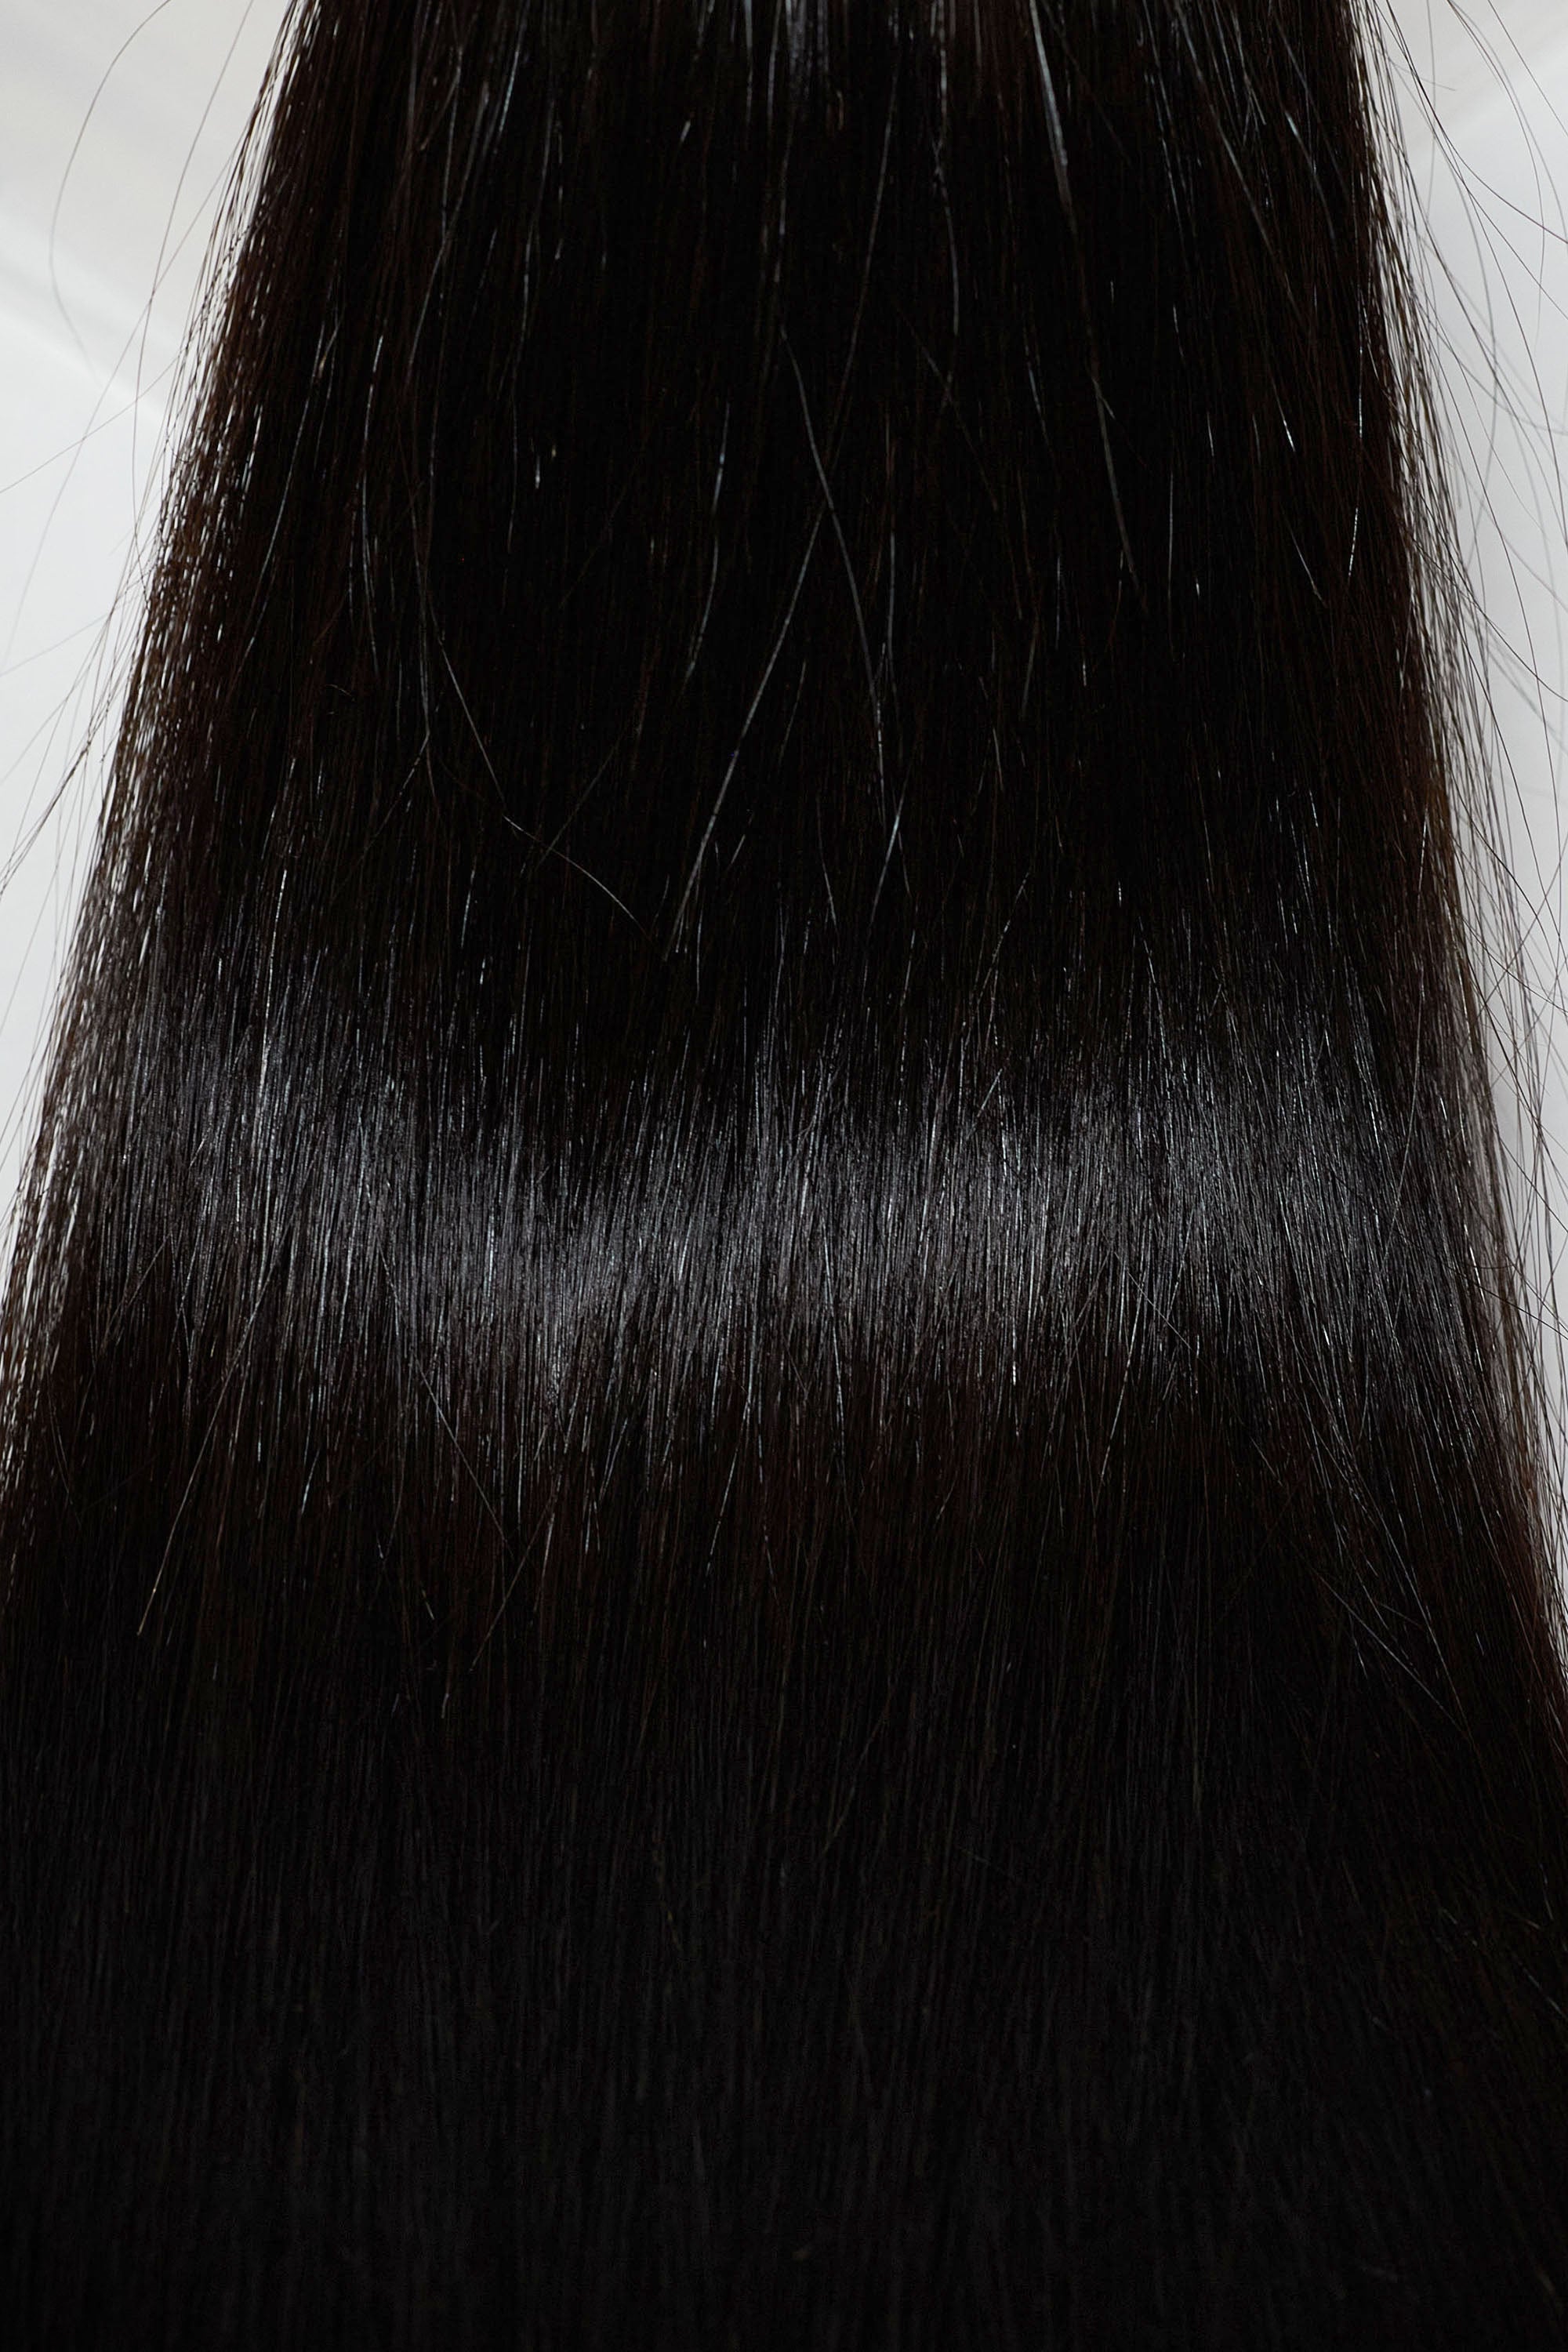 Behair professional Keratin Tip "Premium" 24" (60cm) Natural Straight Jet Black #1 - 25g (1g each pcs) hair extensions